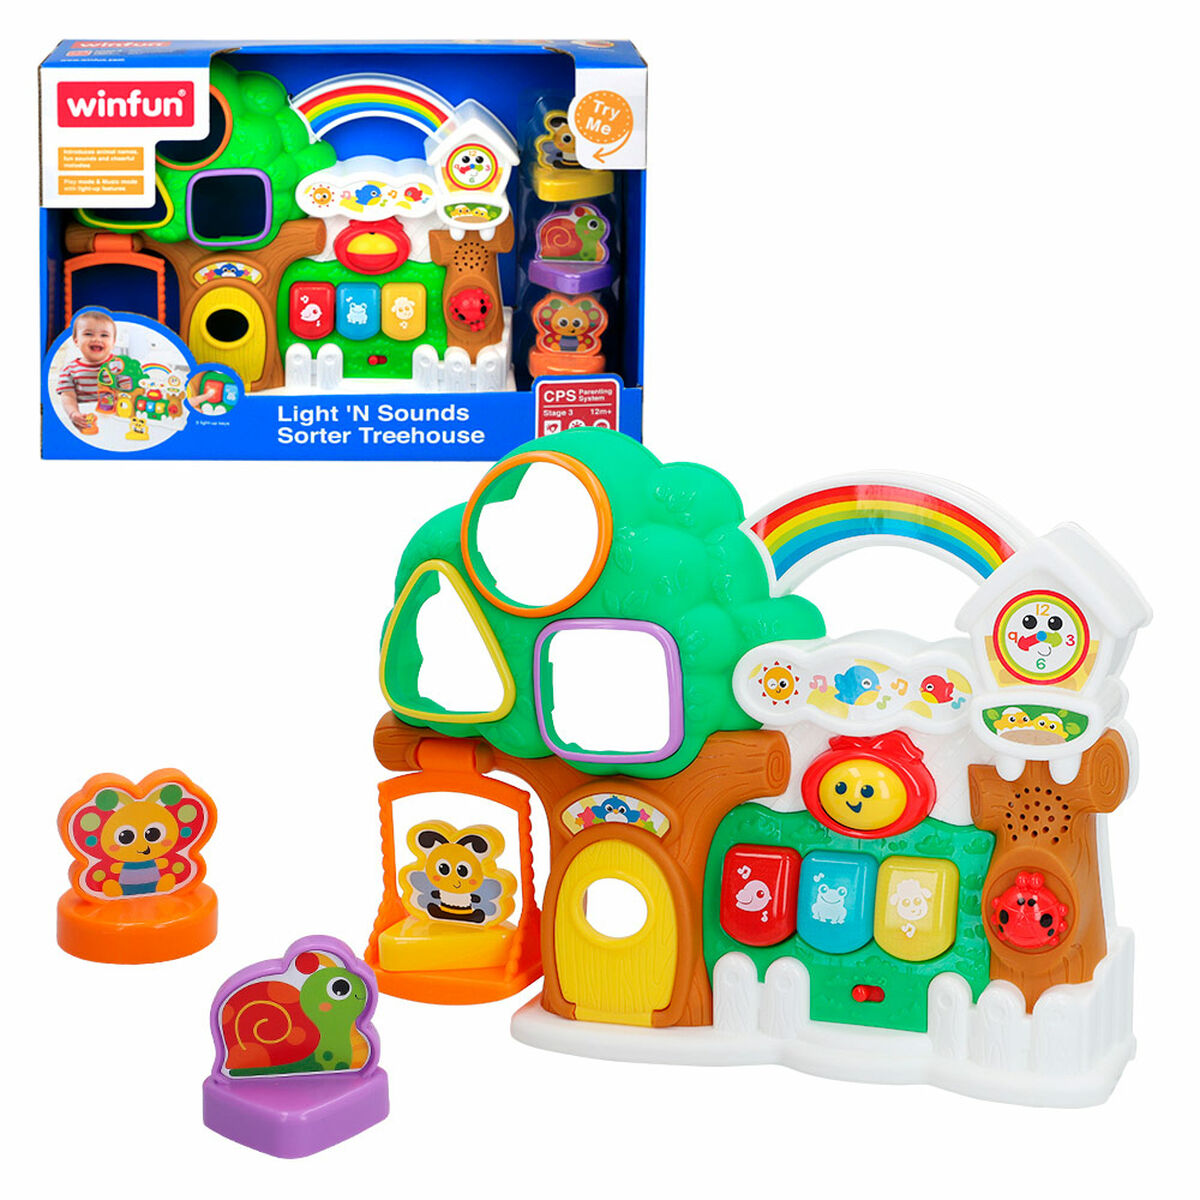 Interaktiv leksak för småbarn Winfun Hus 32 x 24,5 x 7 cm (6 antal)